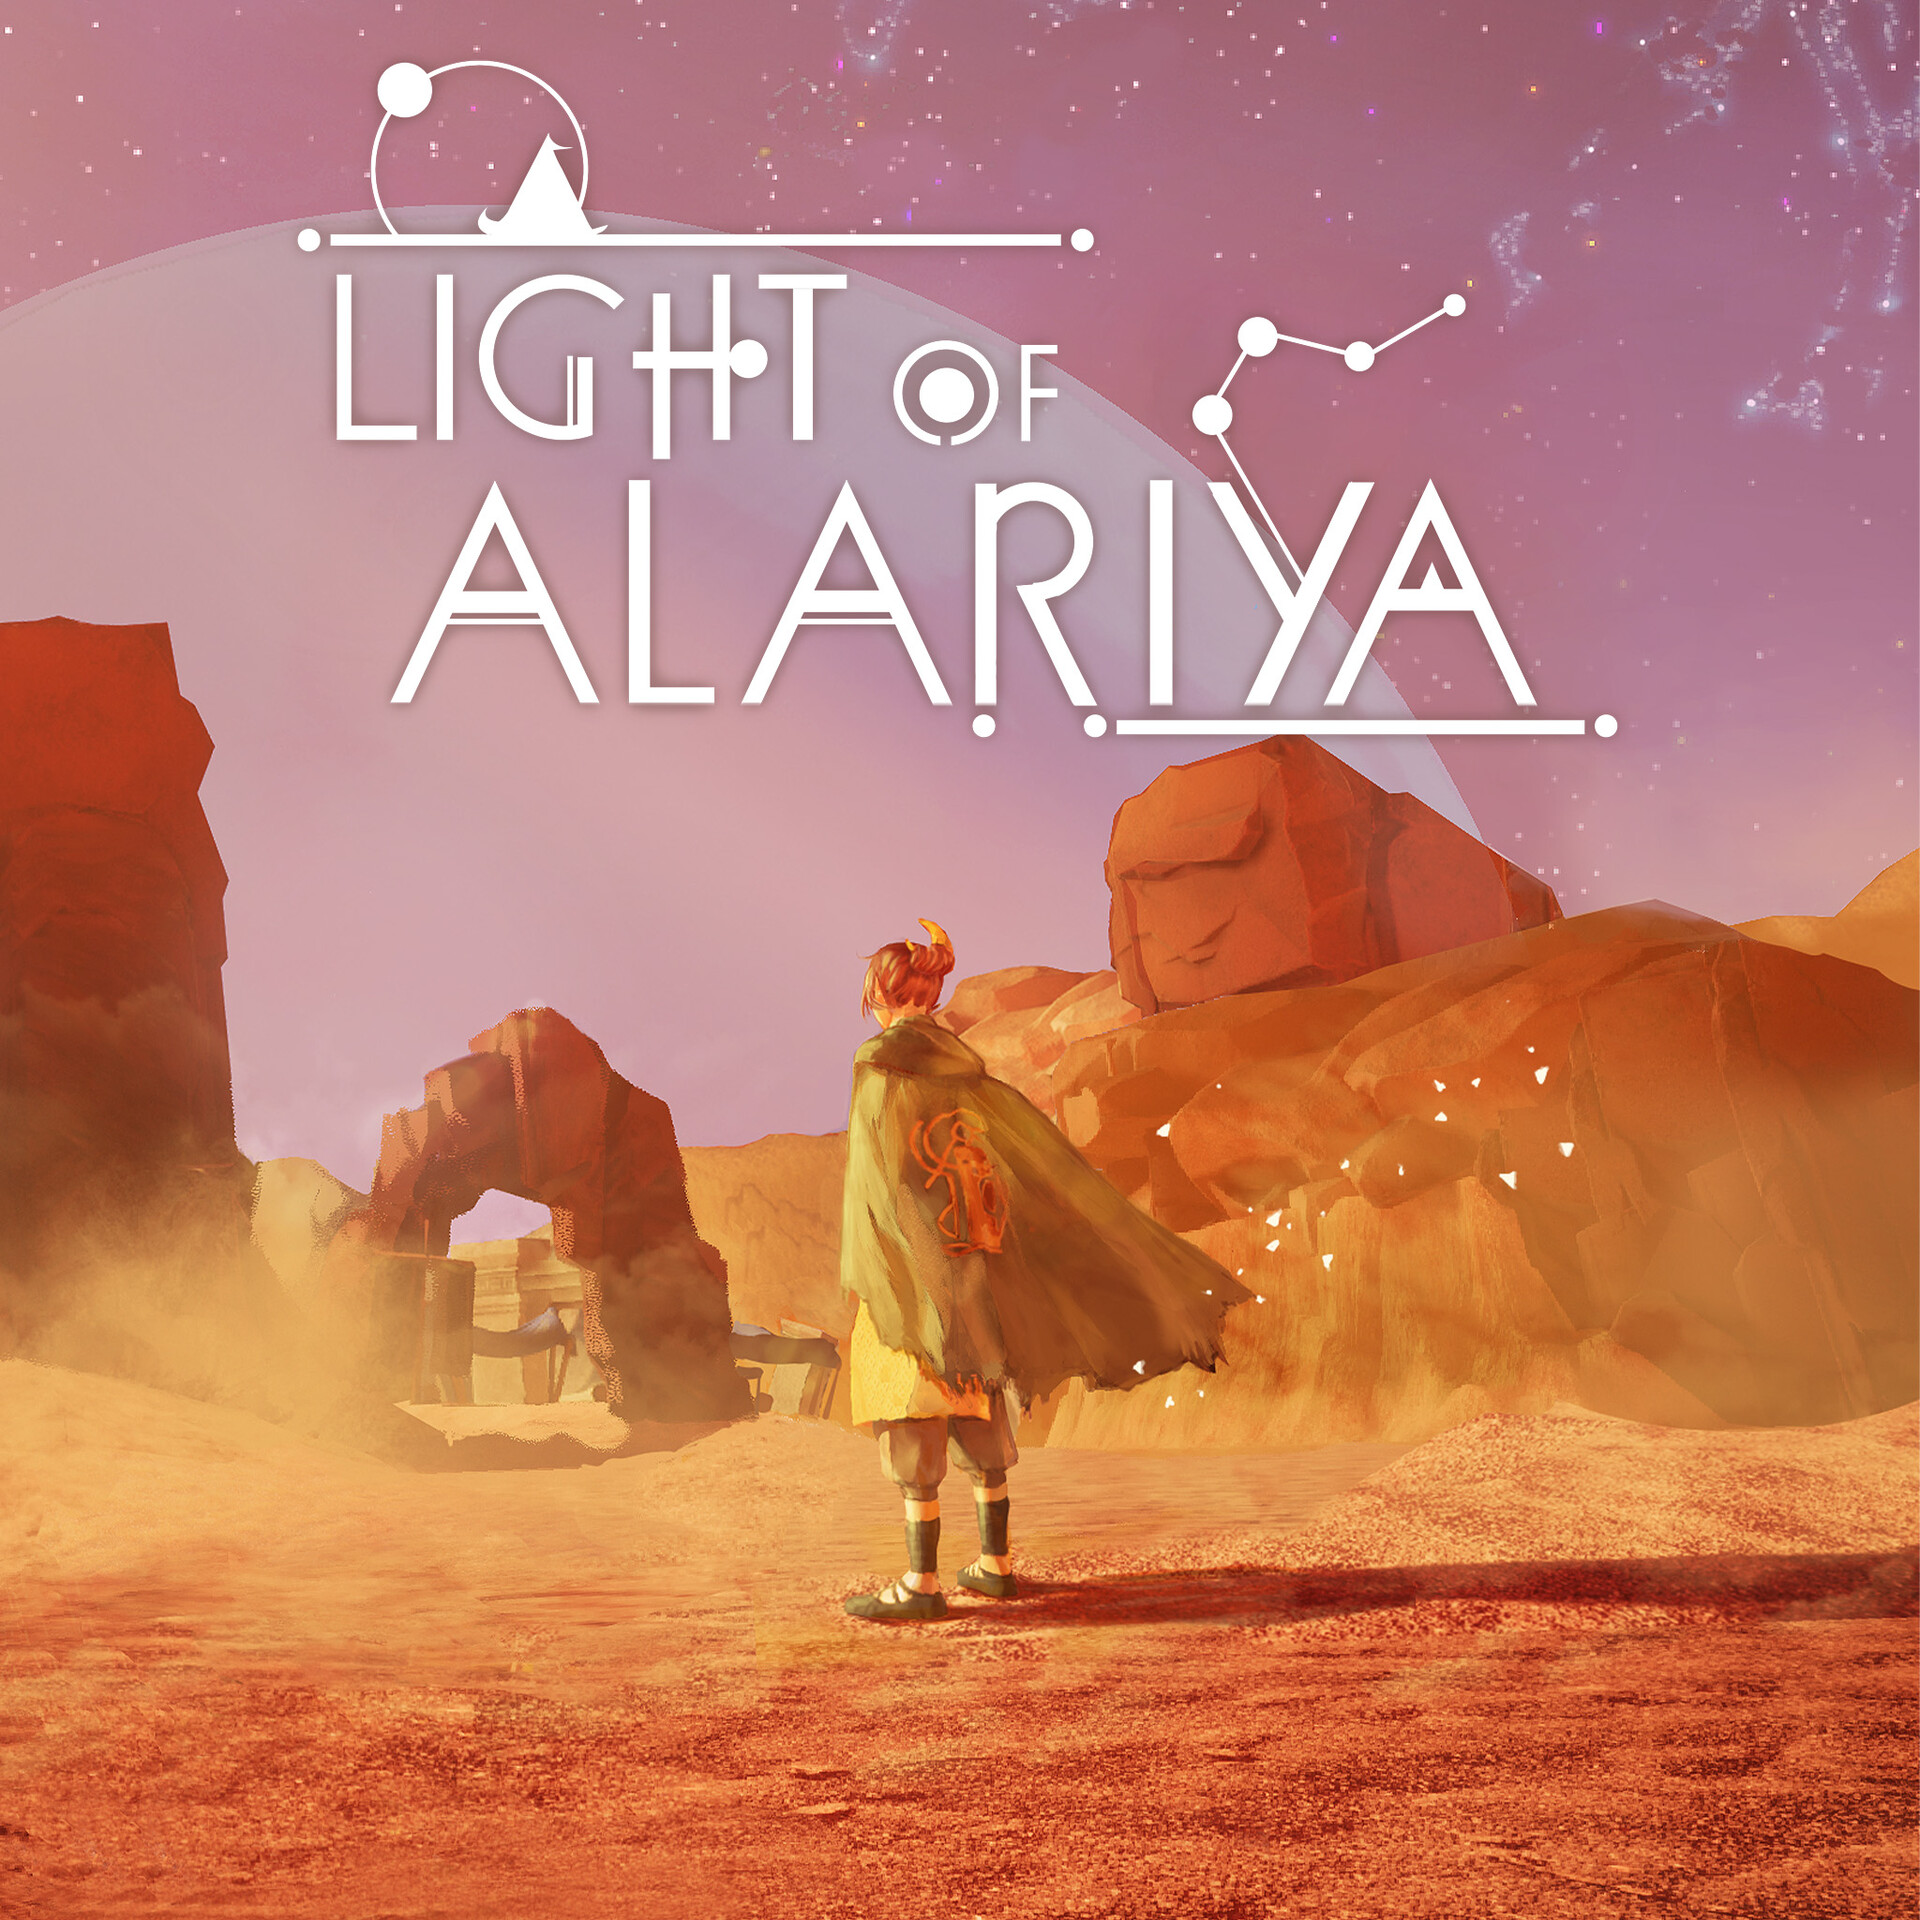 Light of Alariya instal the last version for ios